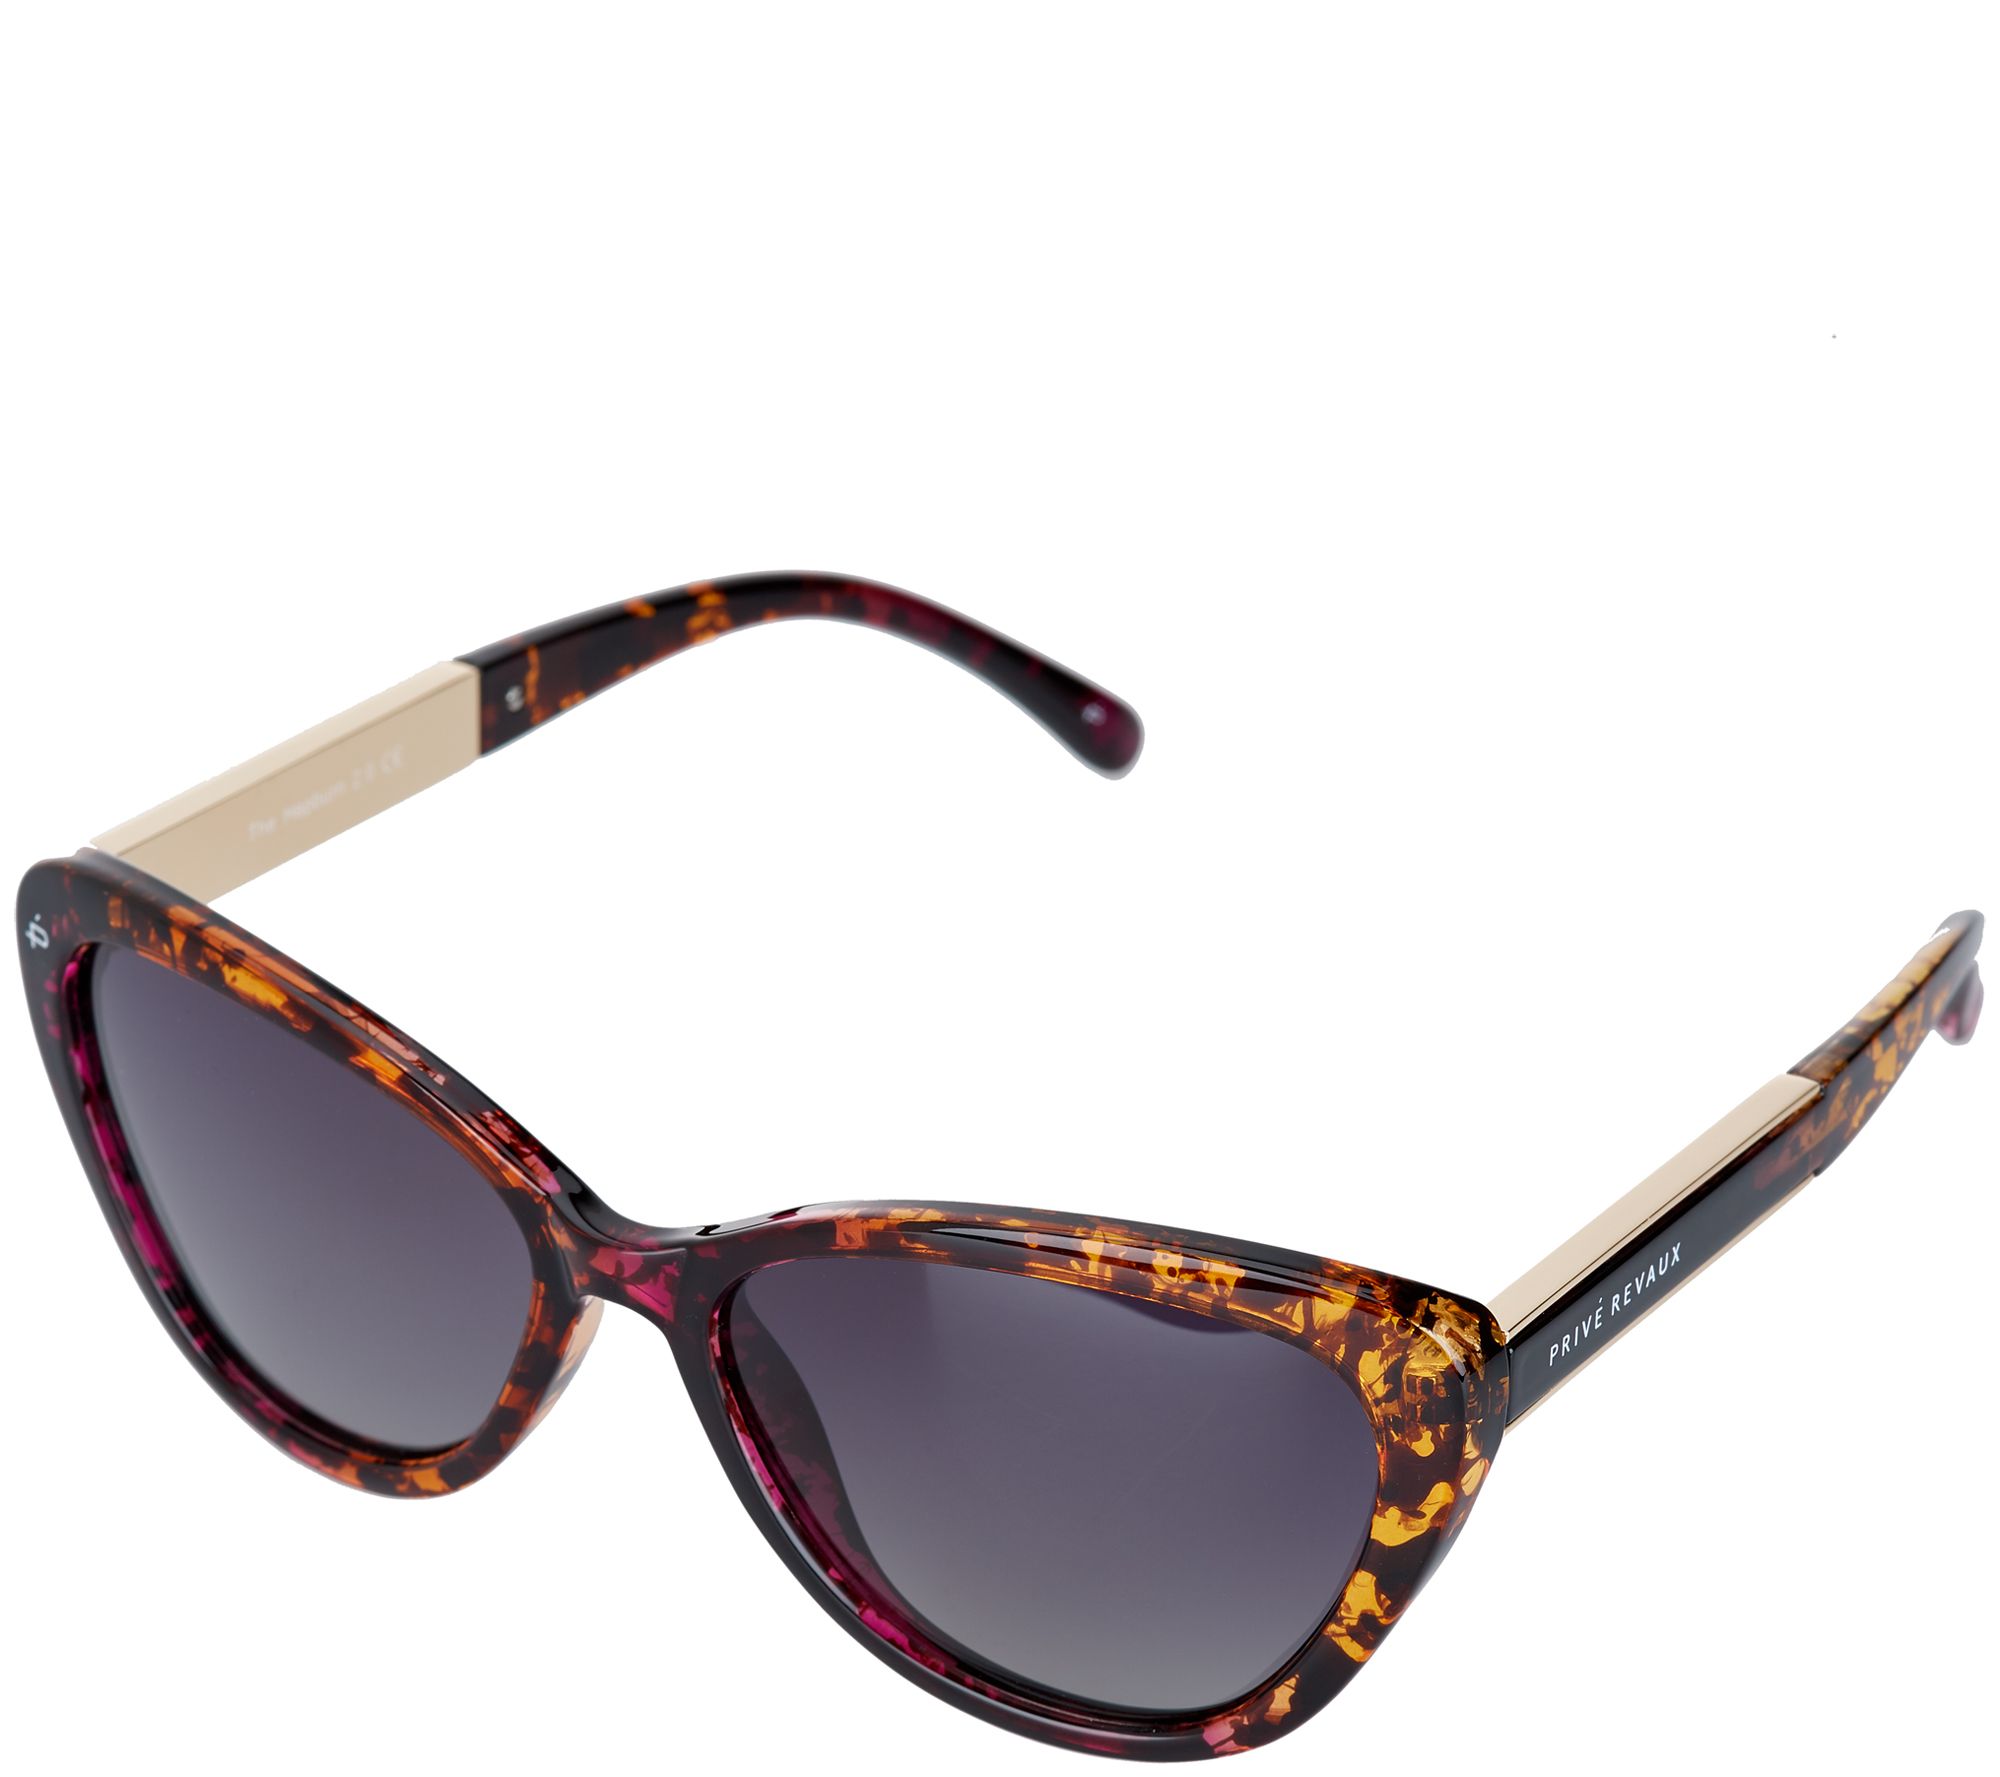 The Venetian Sunglasses